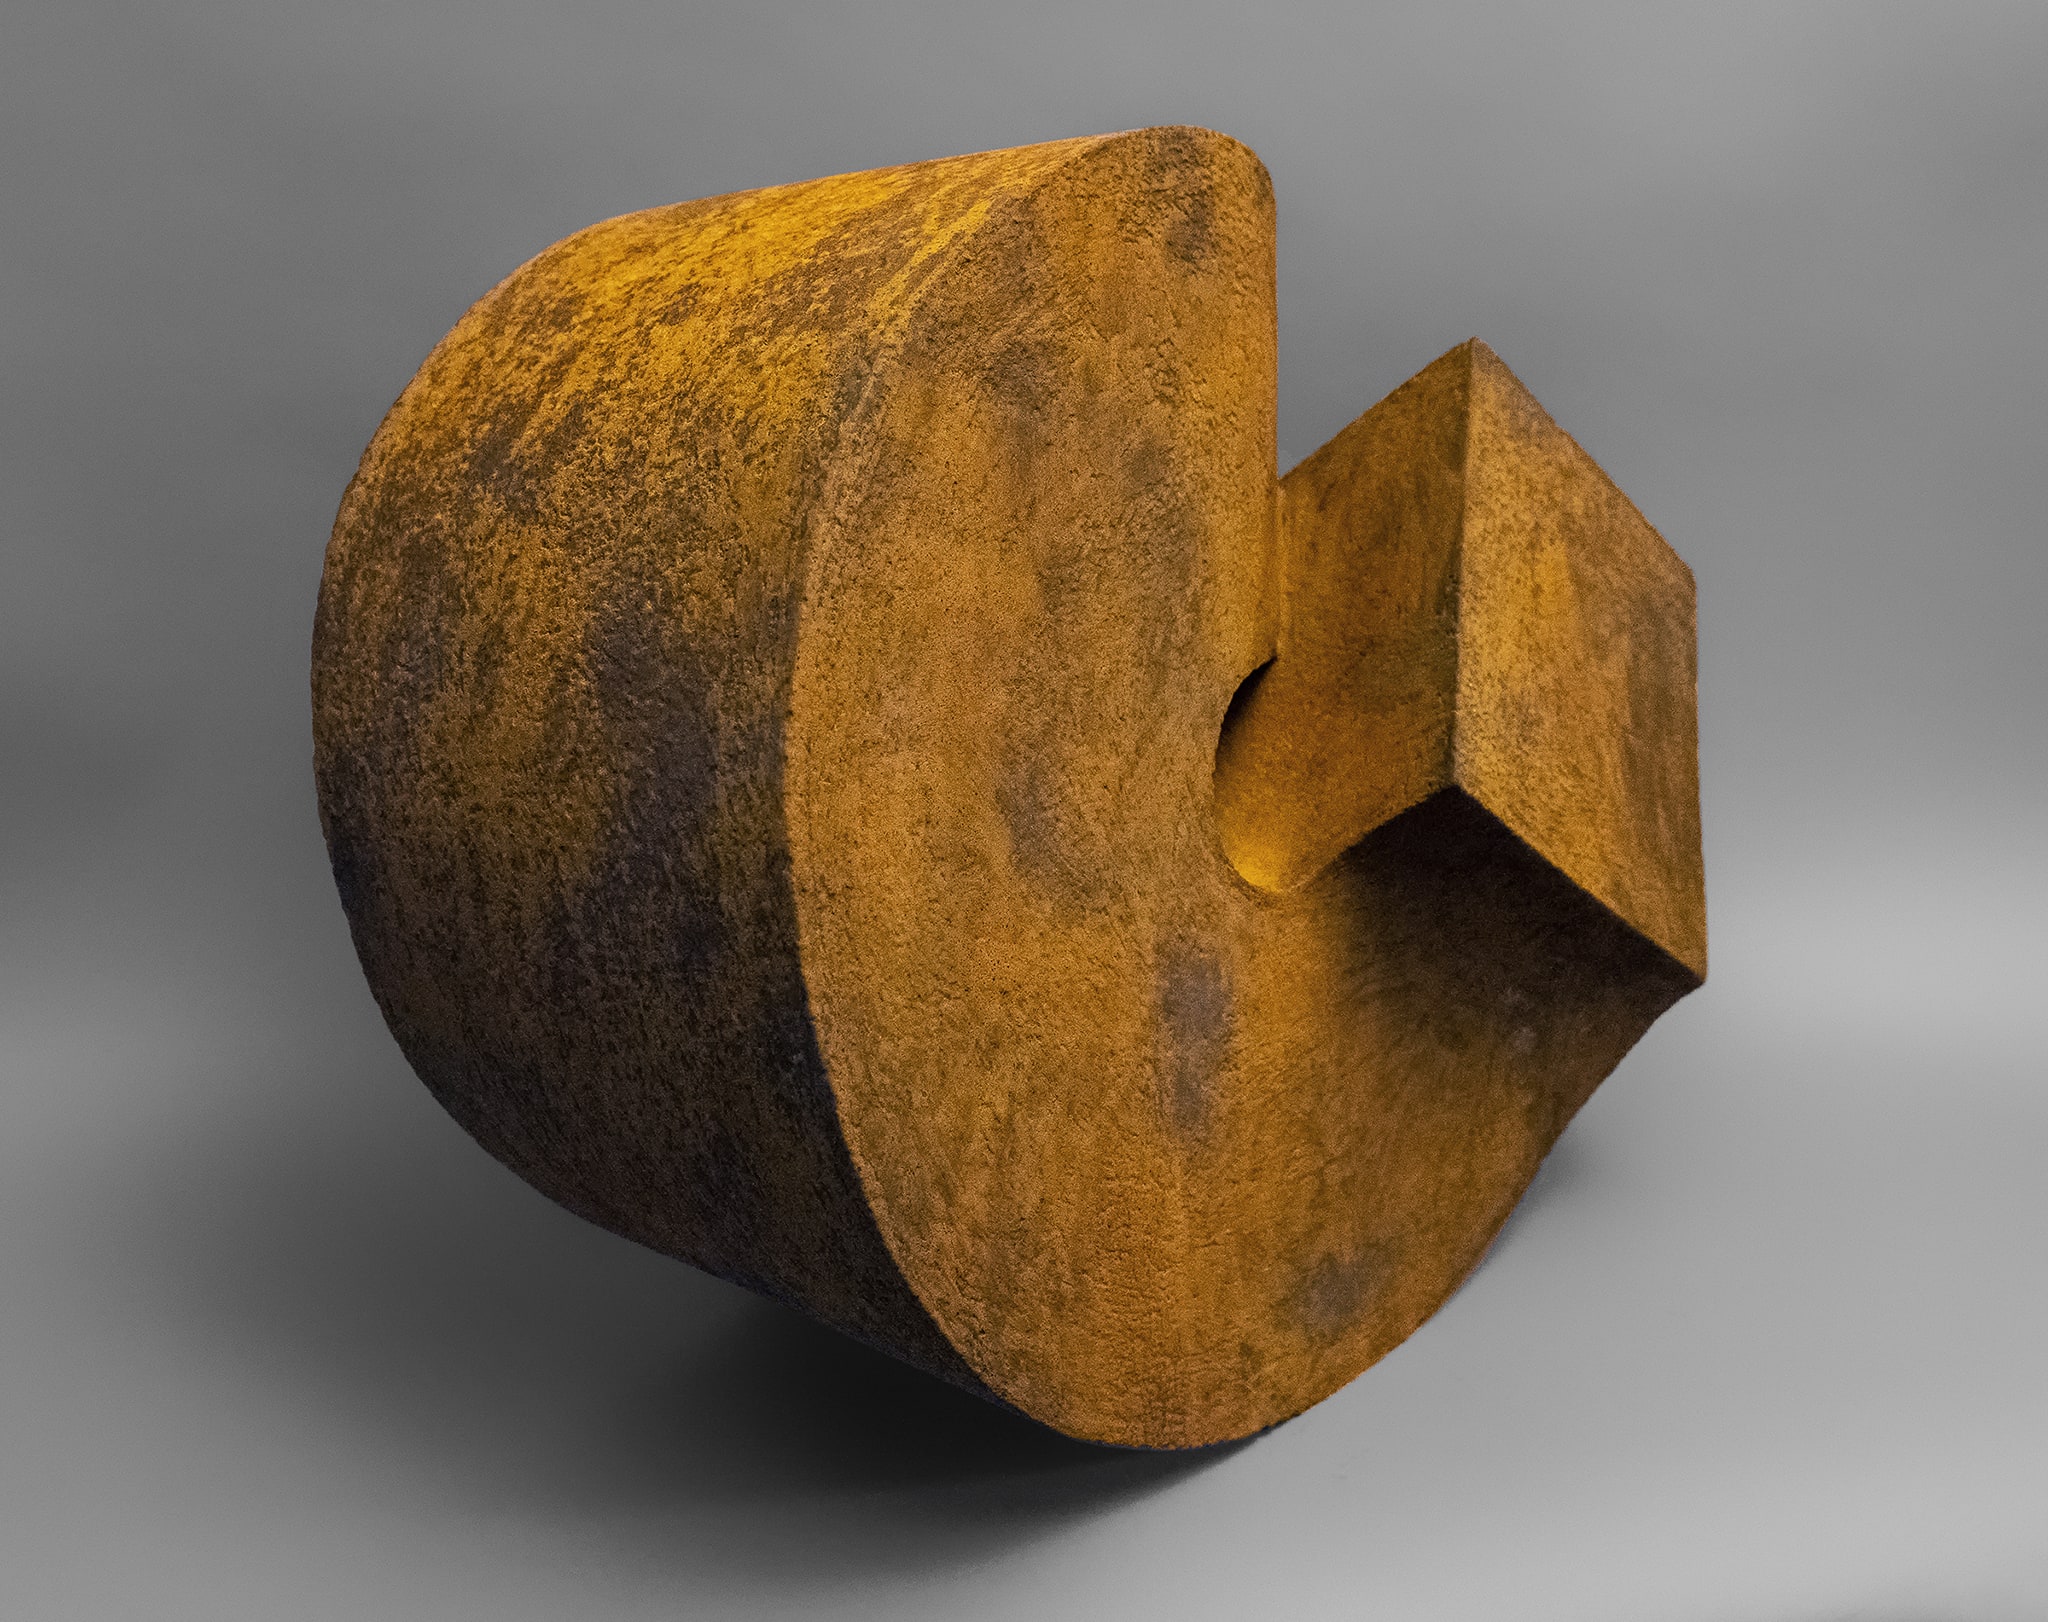 Interlock, 20" x 17" x 13", clay with iron oxide finish